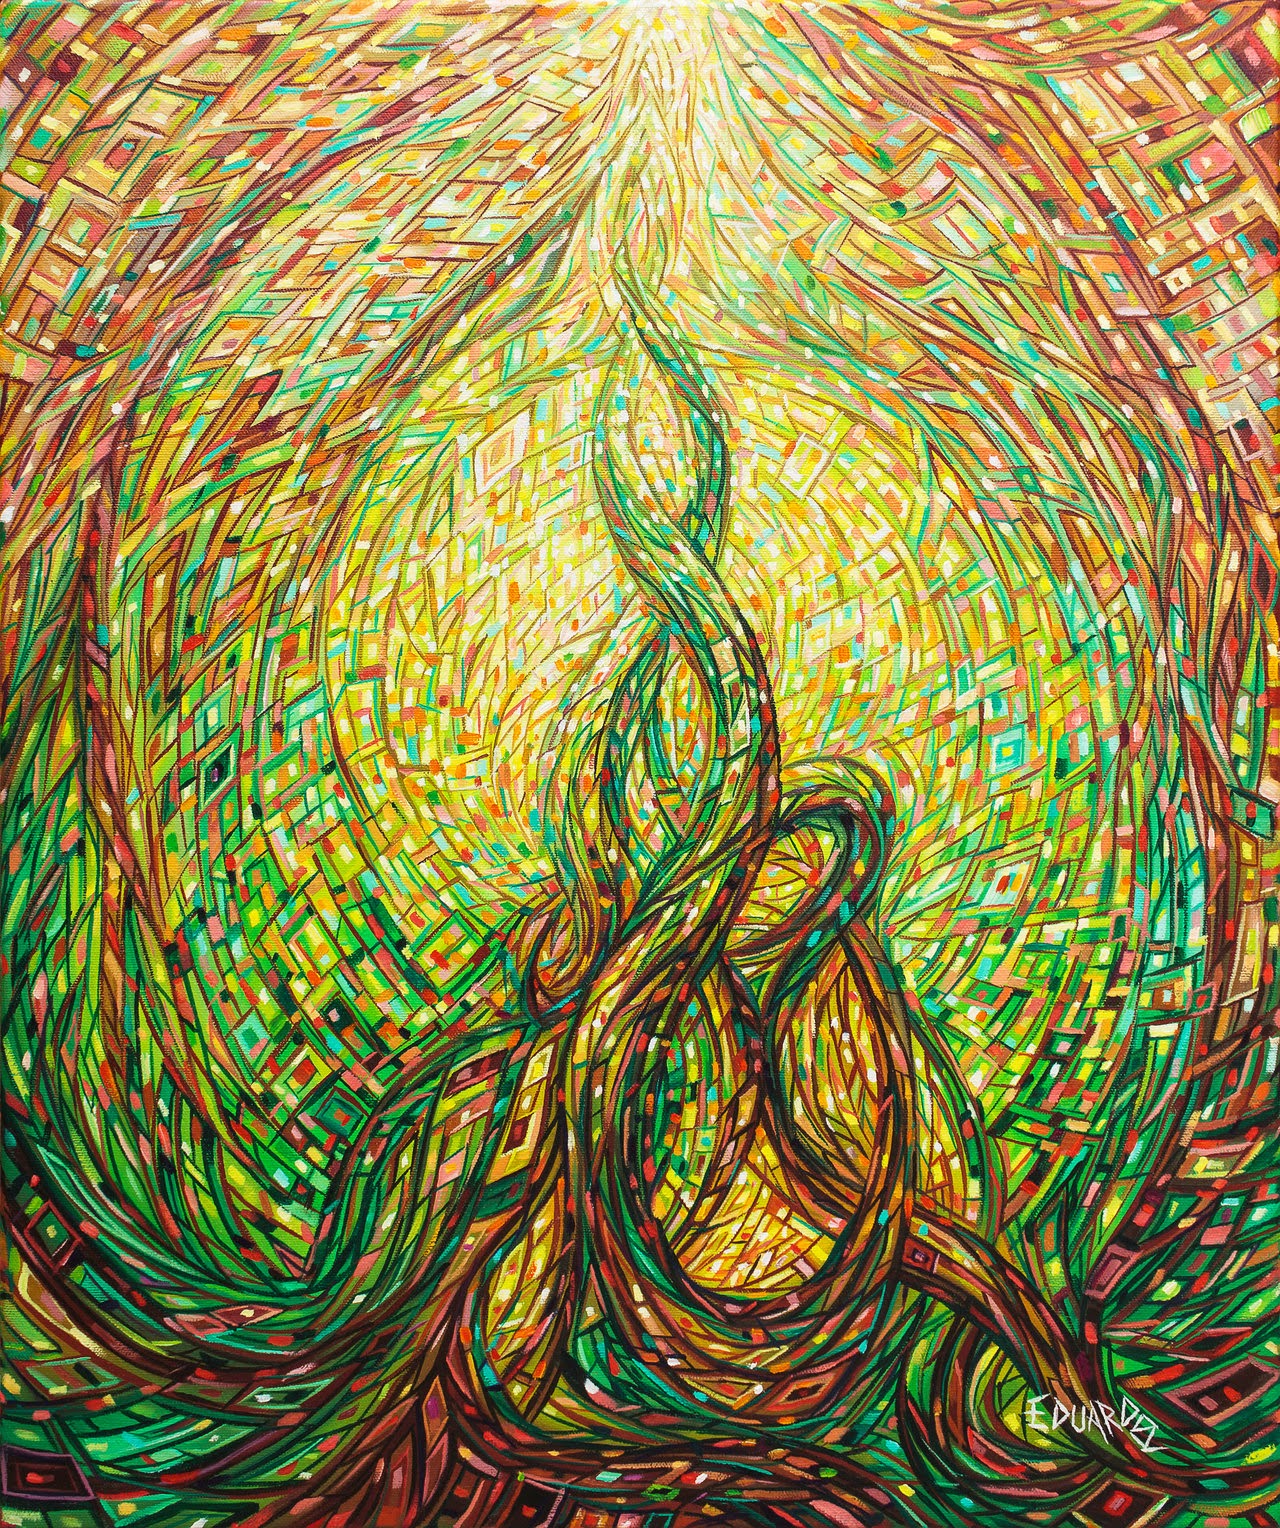 09-Seed-Eduardo-R-Calzado-Paintings-in-Swirls-of-Colour-www-designstack-co